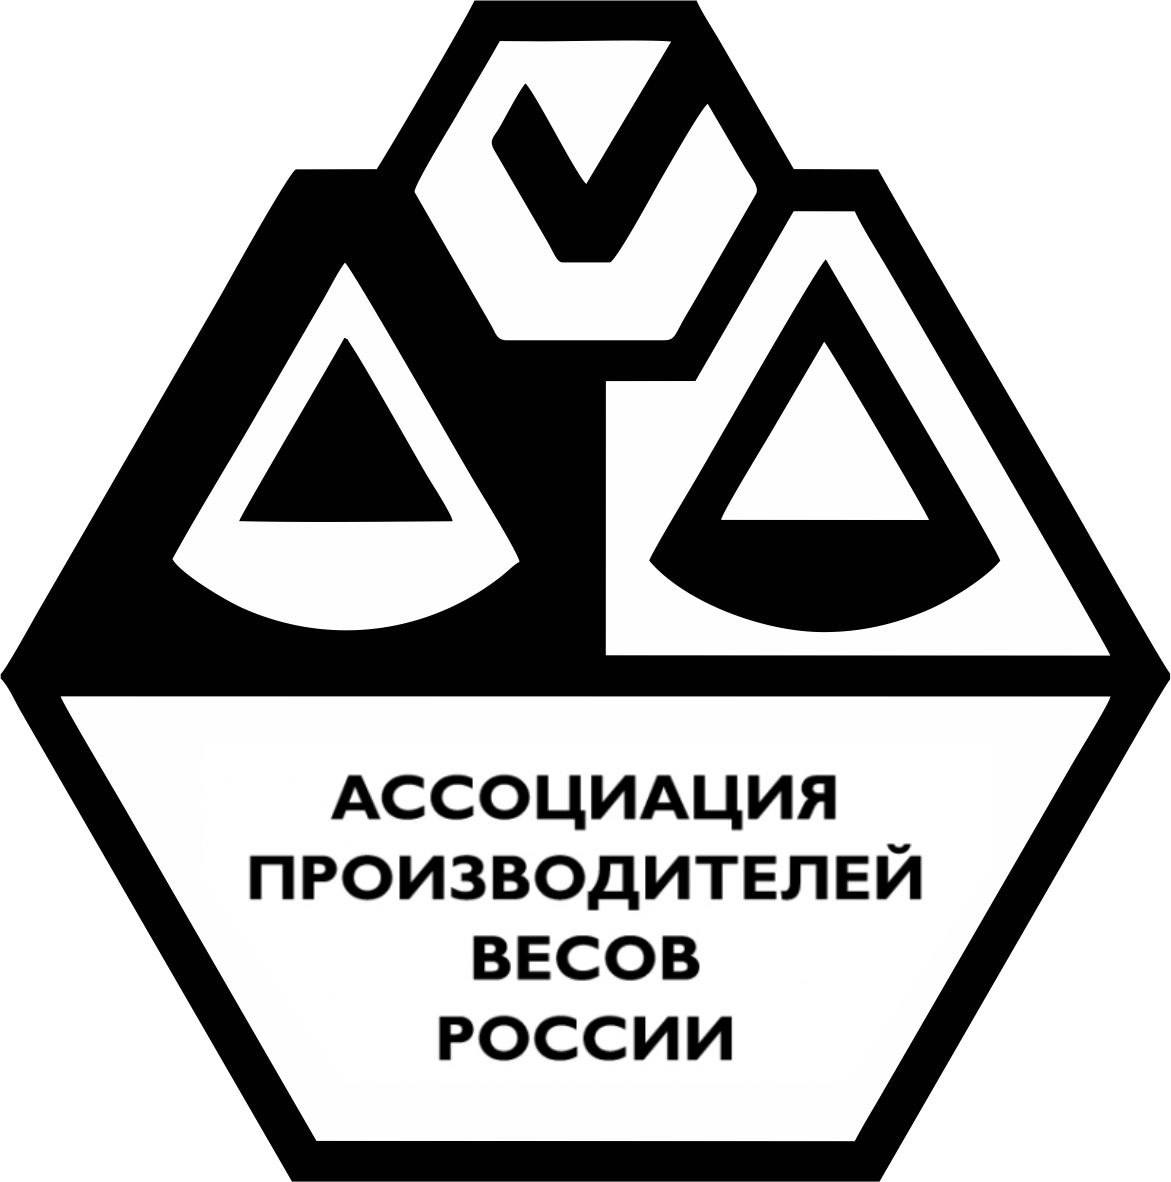 Член ассоциации производителей весов России